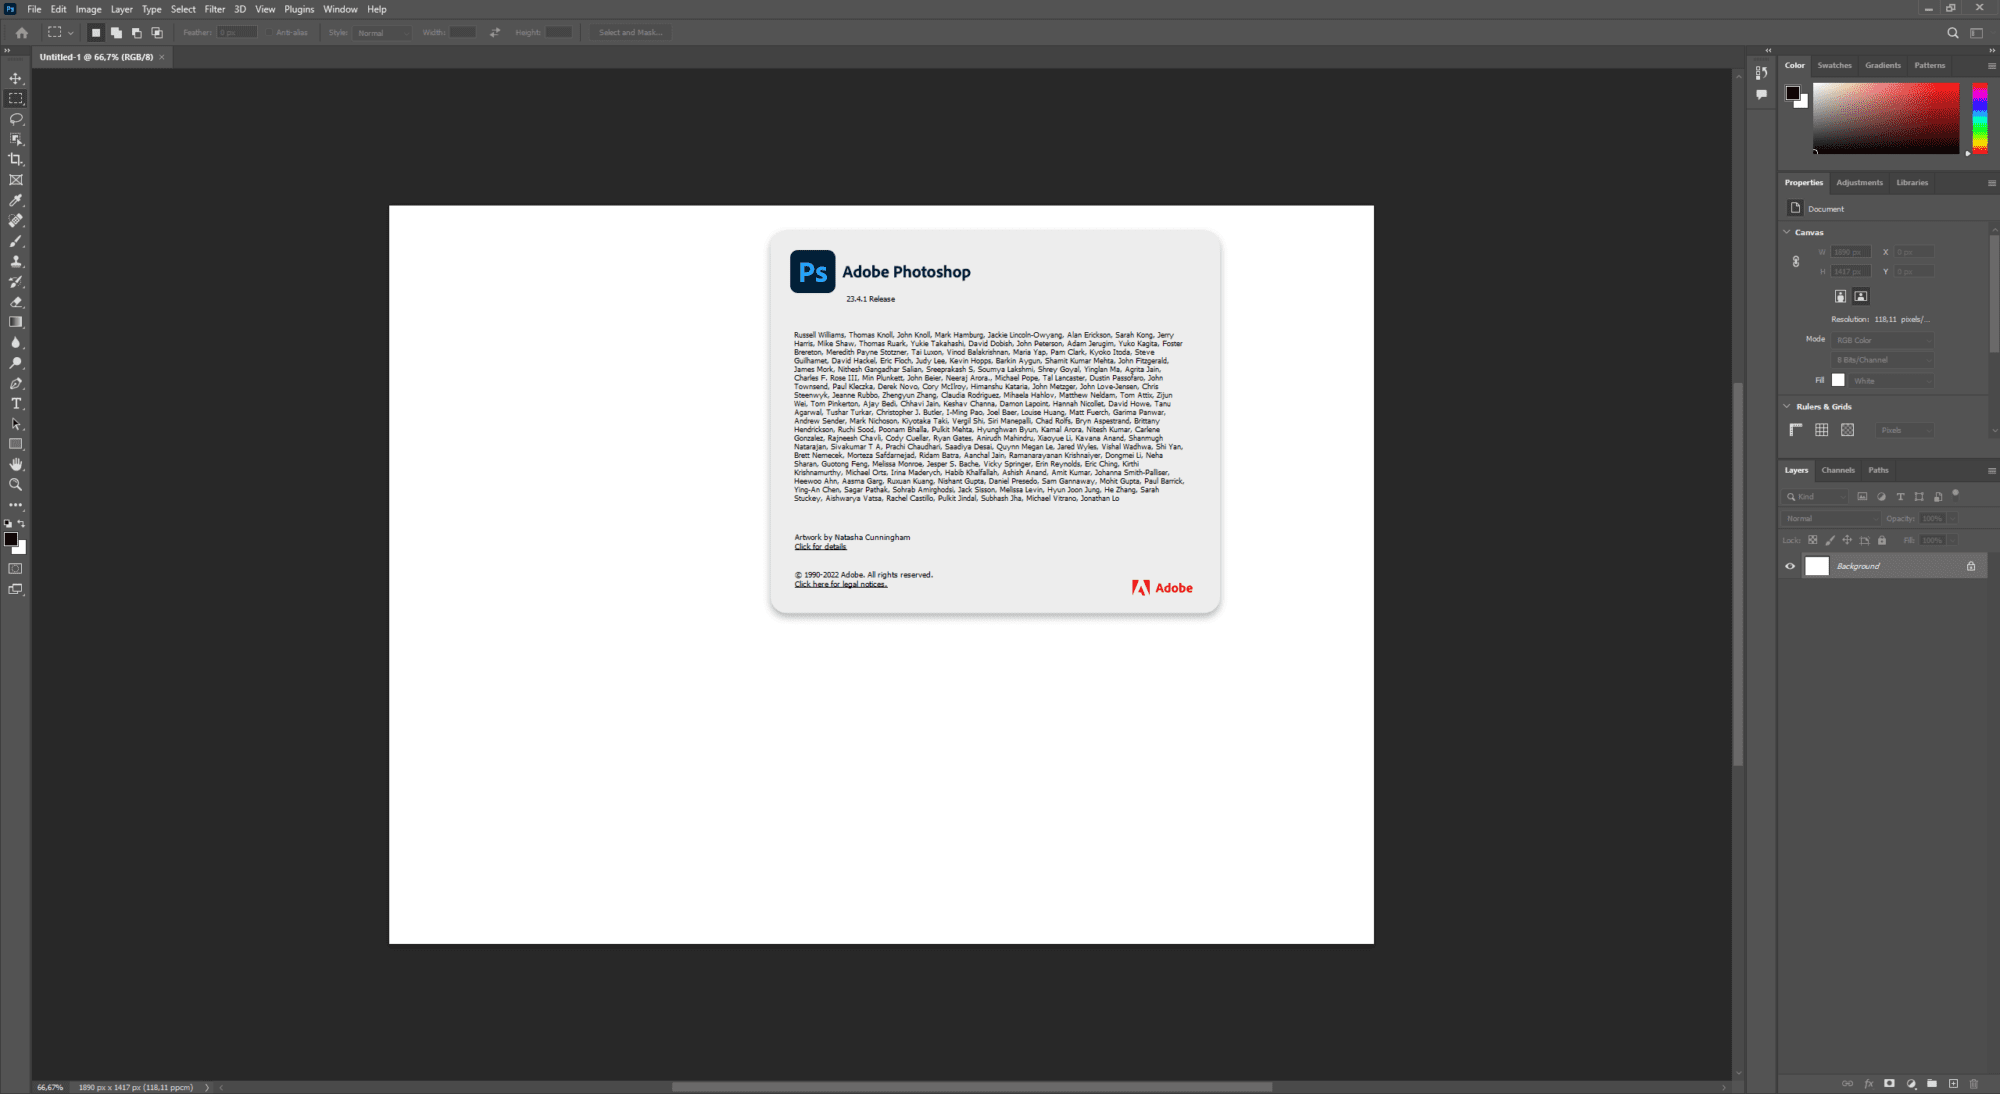 Adobe Photoshop 2022 v23.4.1.547 x64 Multilingual 1